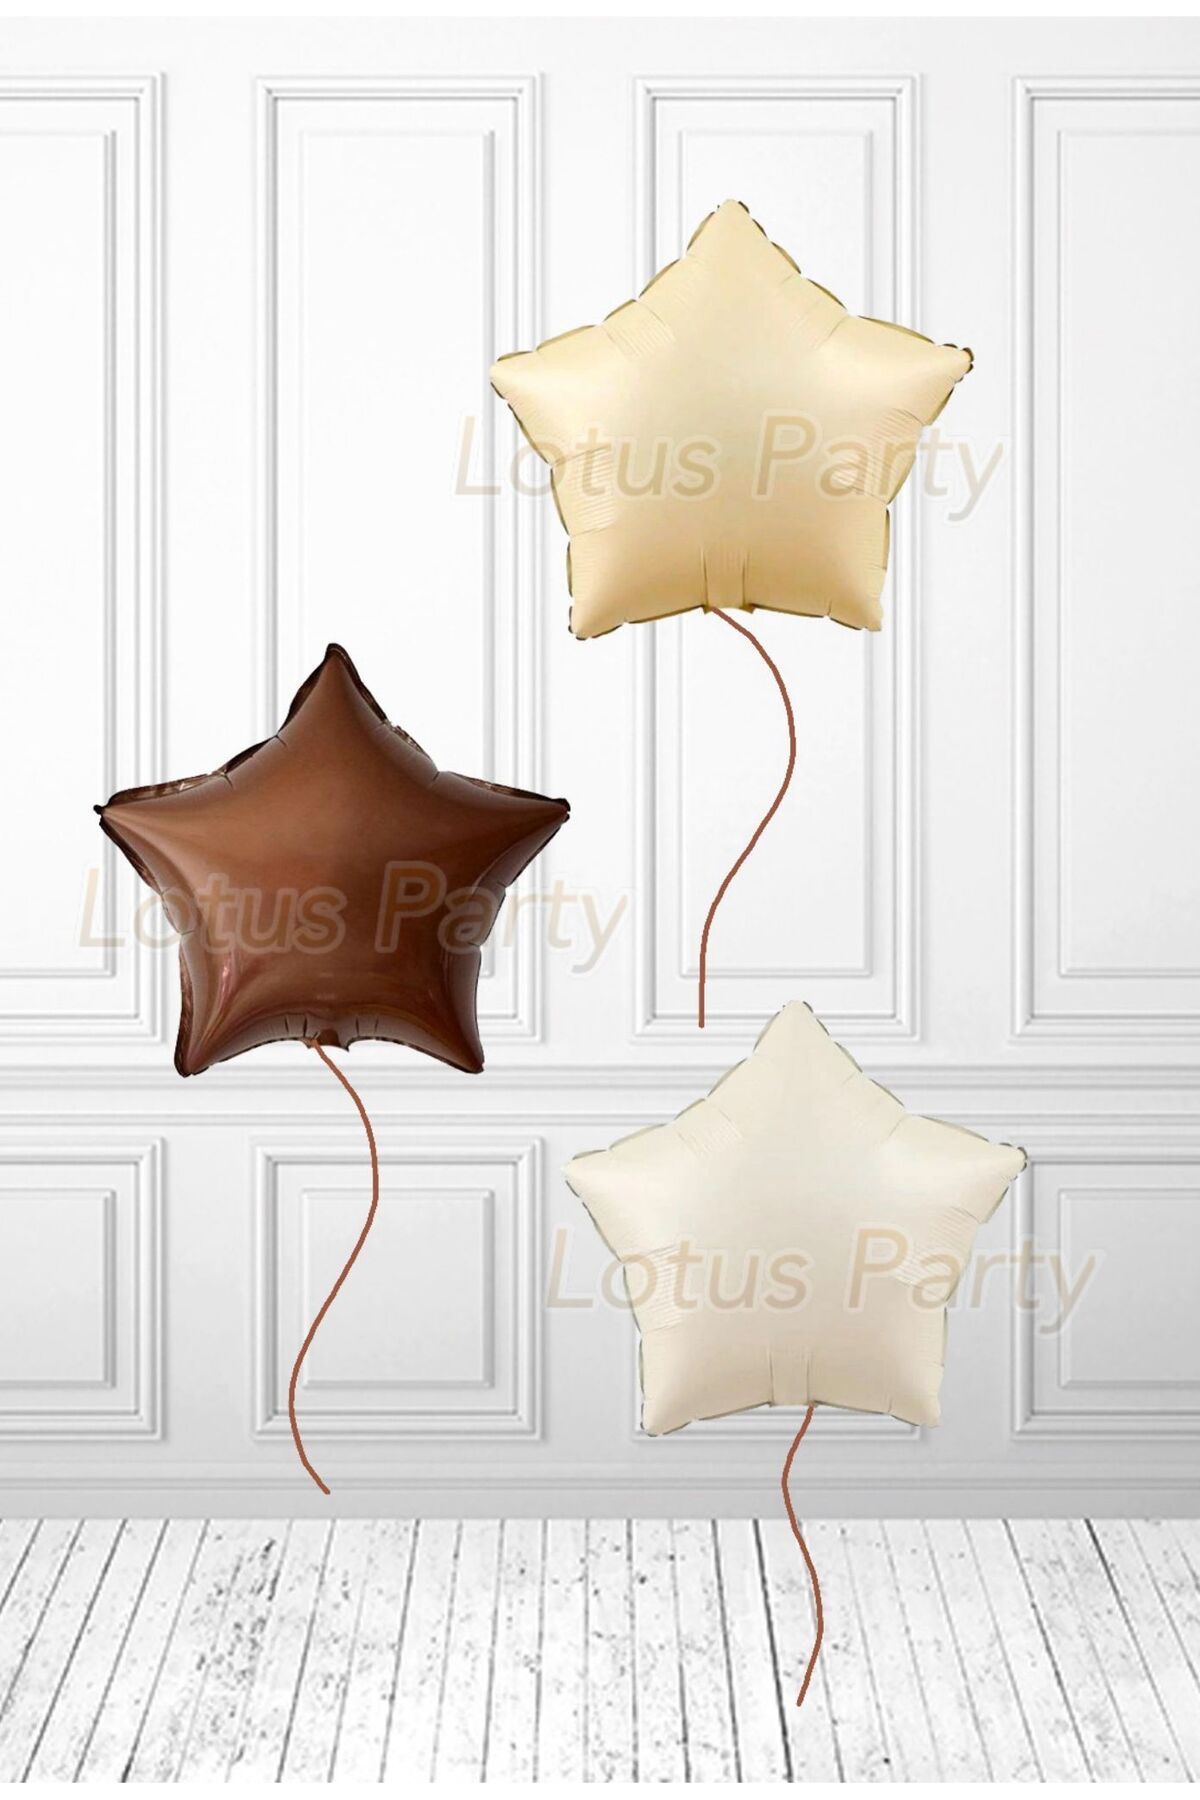 LOTUS PARTY Retro Yıldız Set Kahverengi Yıldız Balon Karamel Renk Yıldız Balon Krem Renk Yıldız Balon 3 Adet